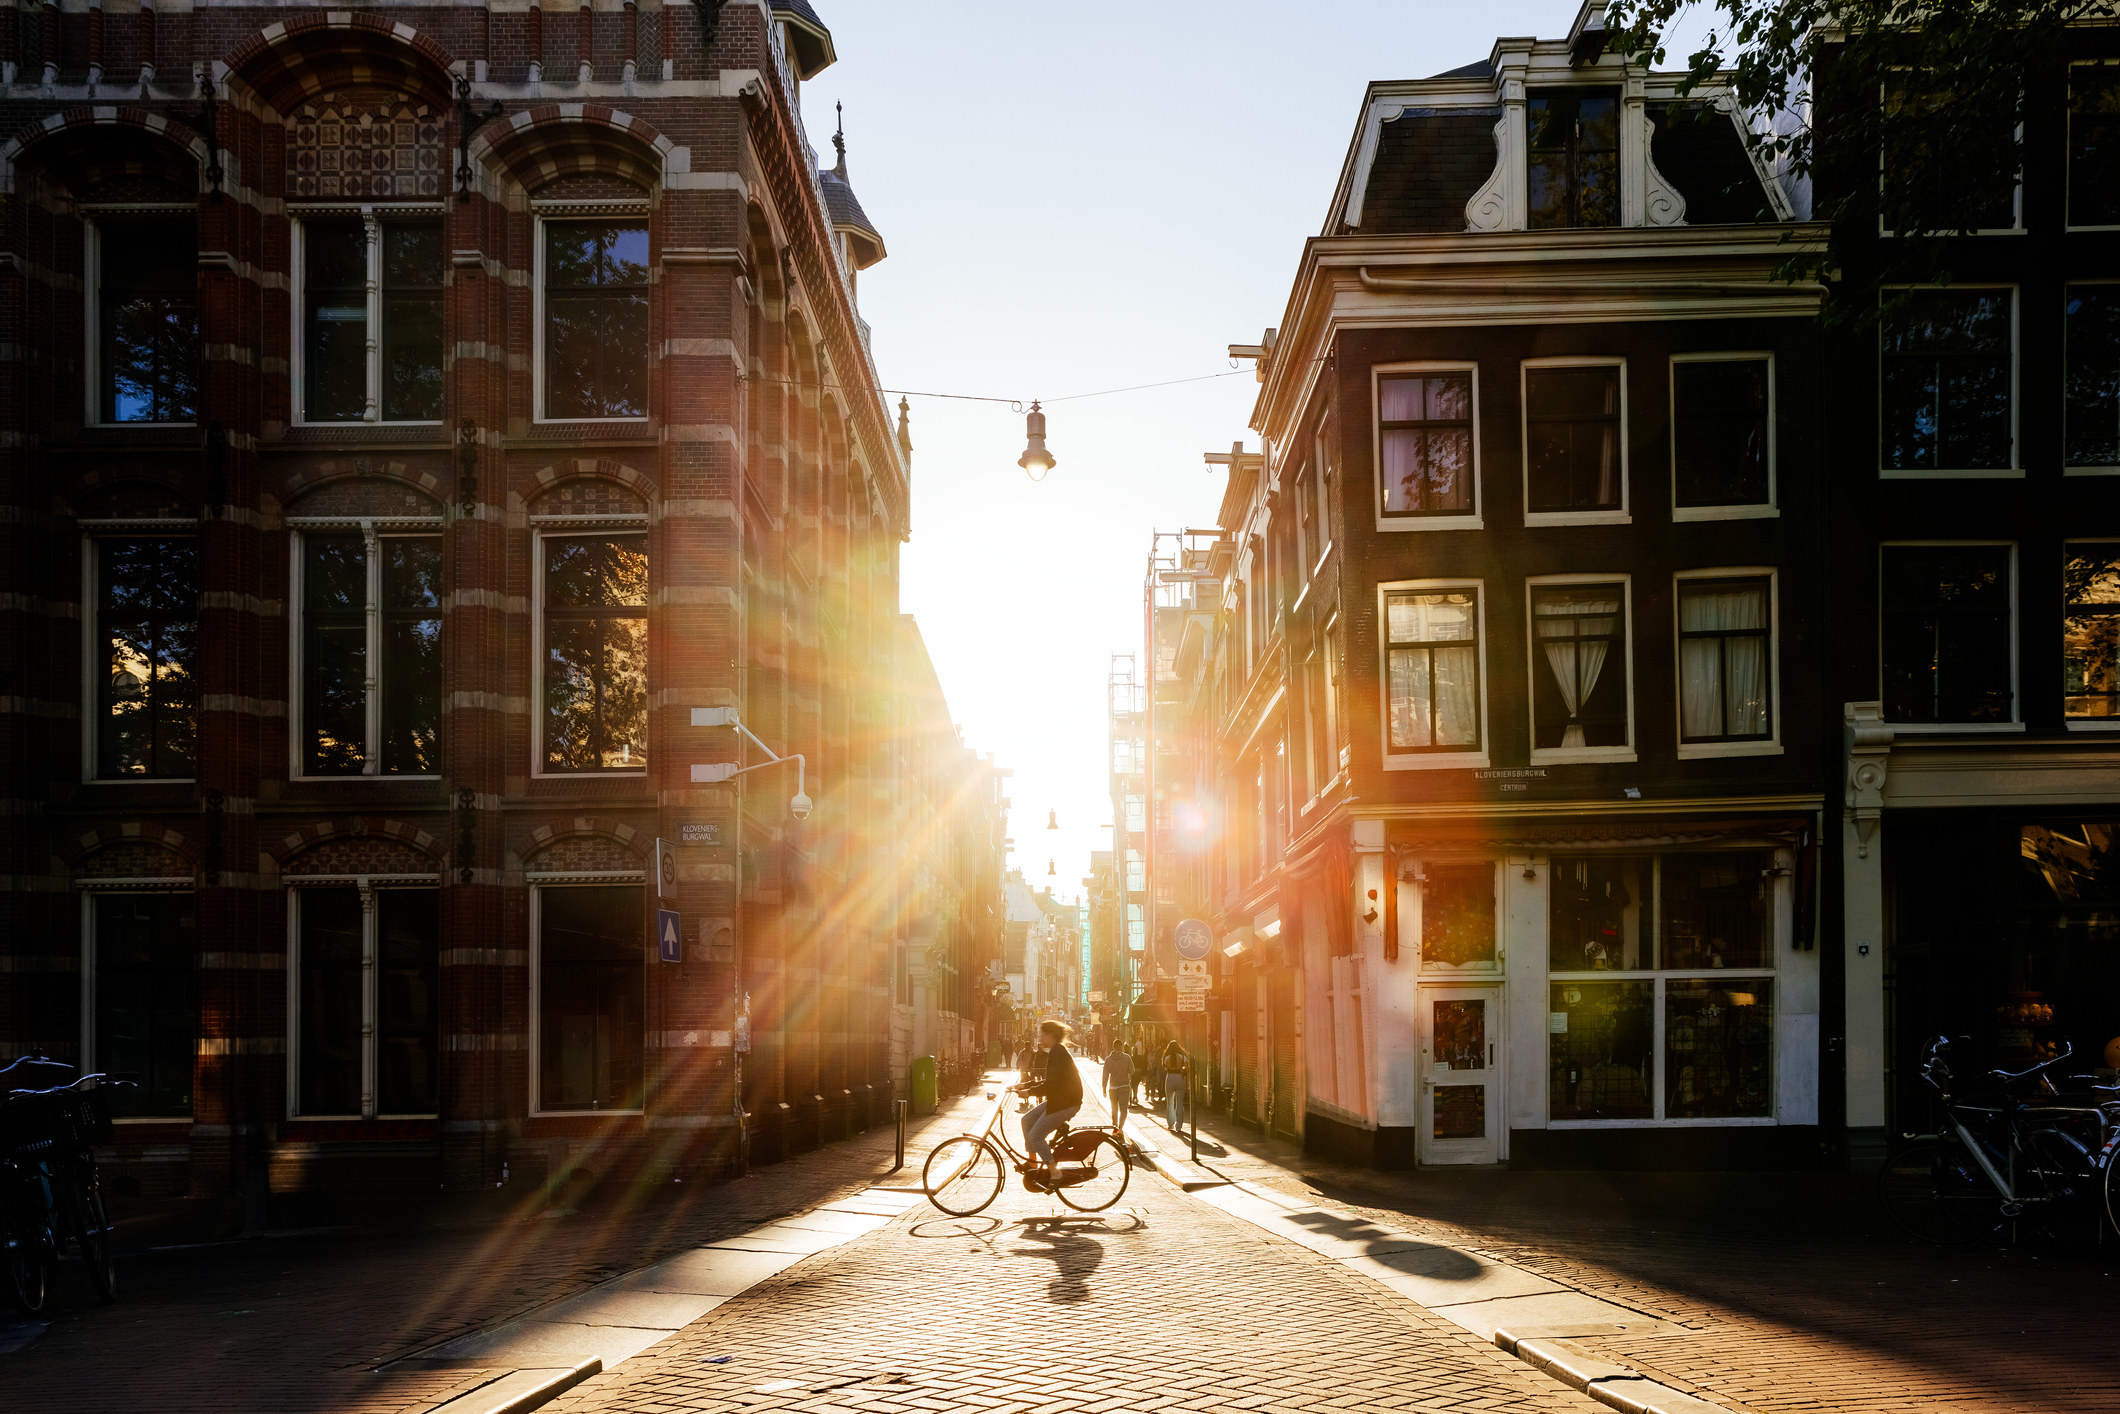 Sun shining through the streets in Amsterdam.